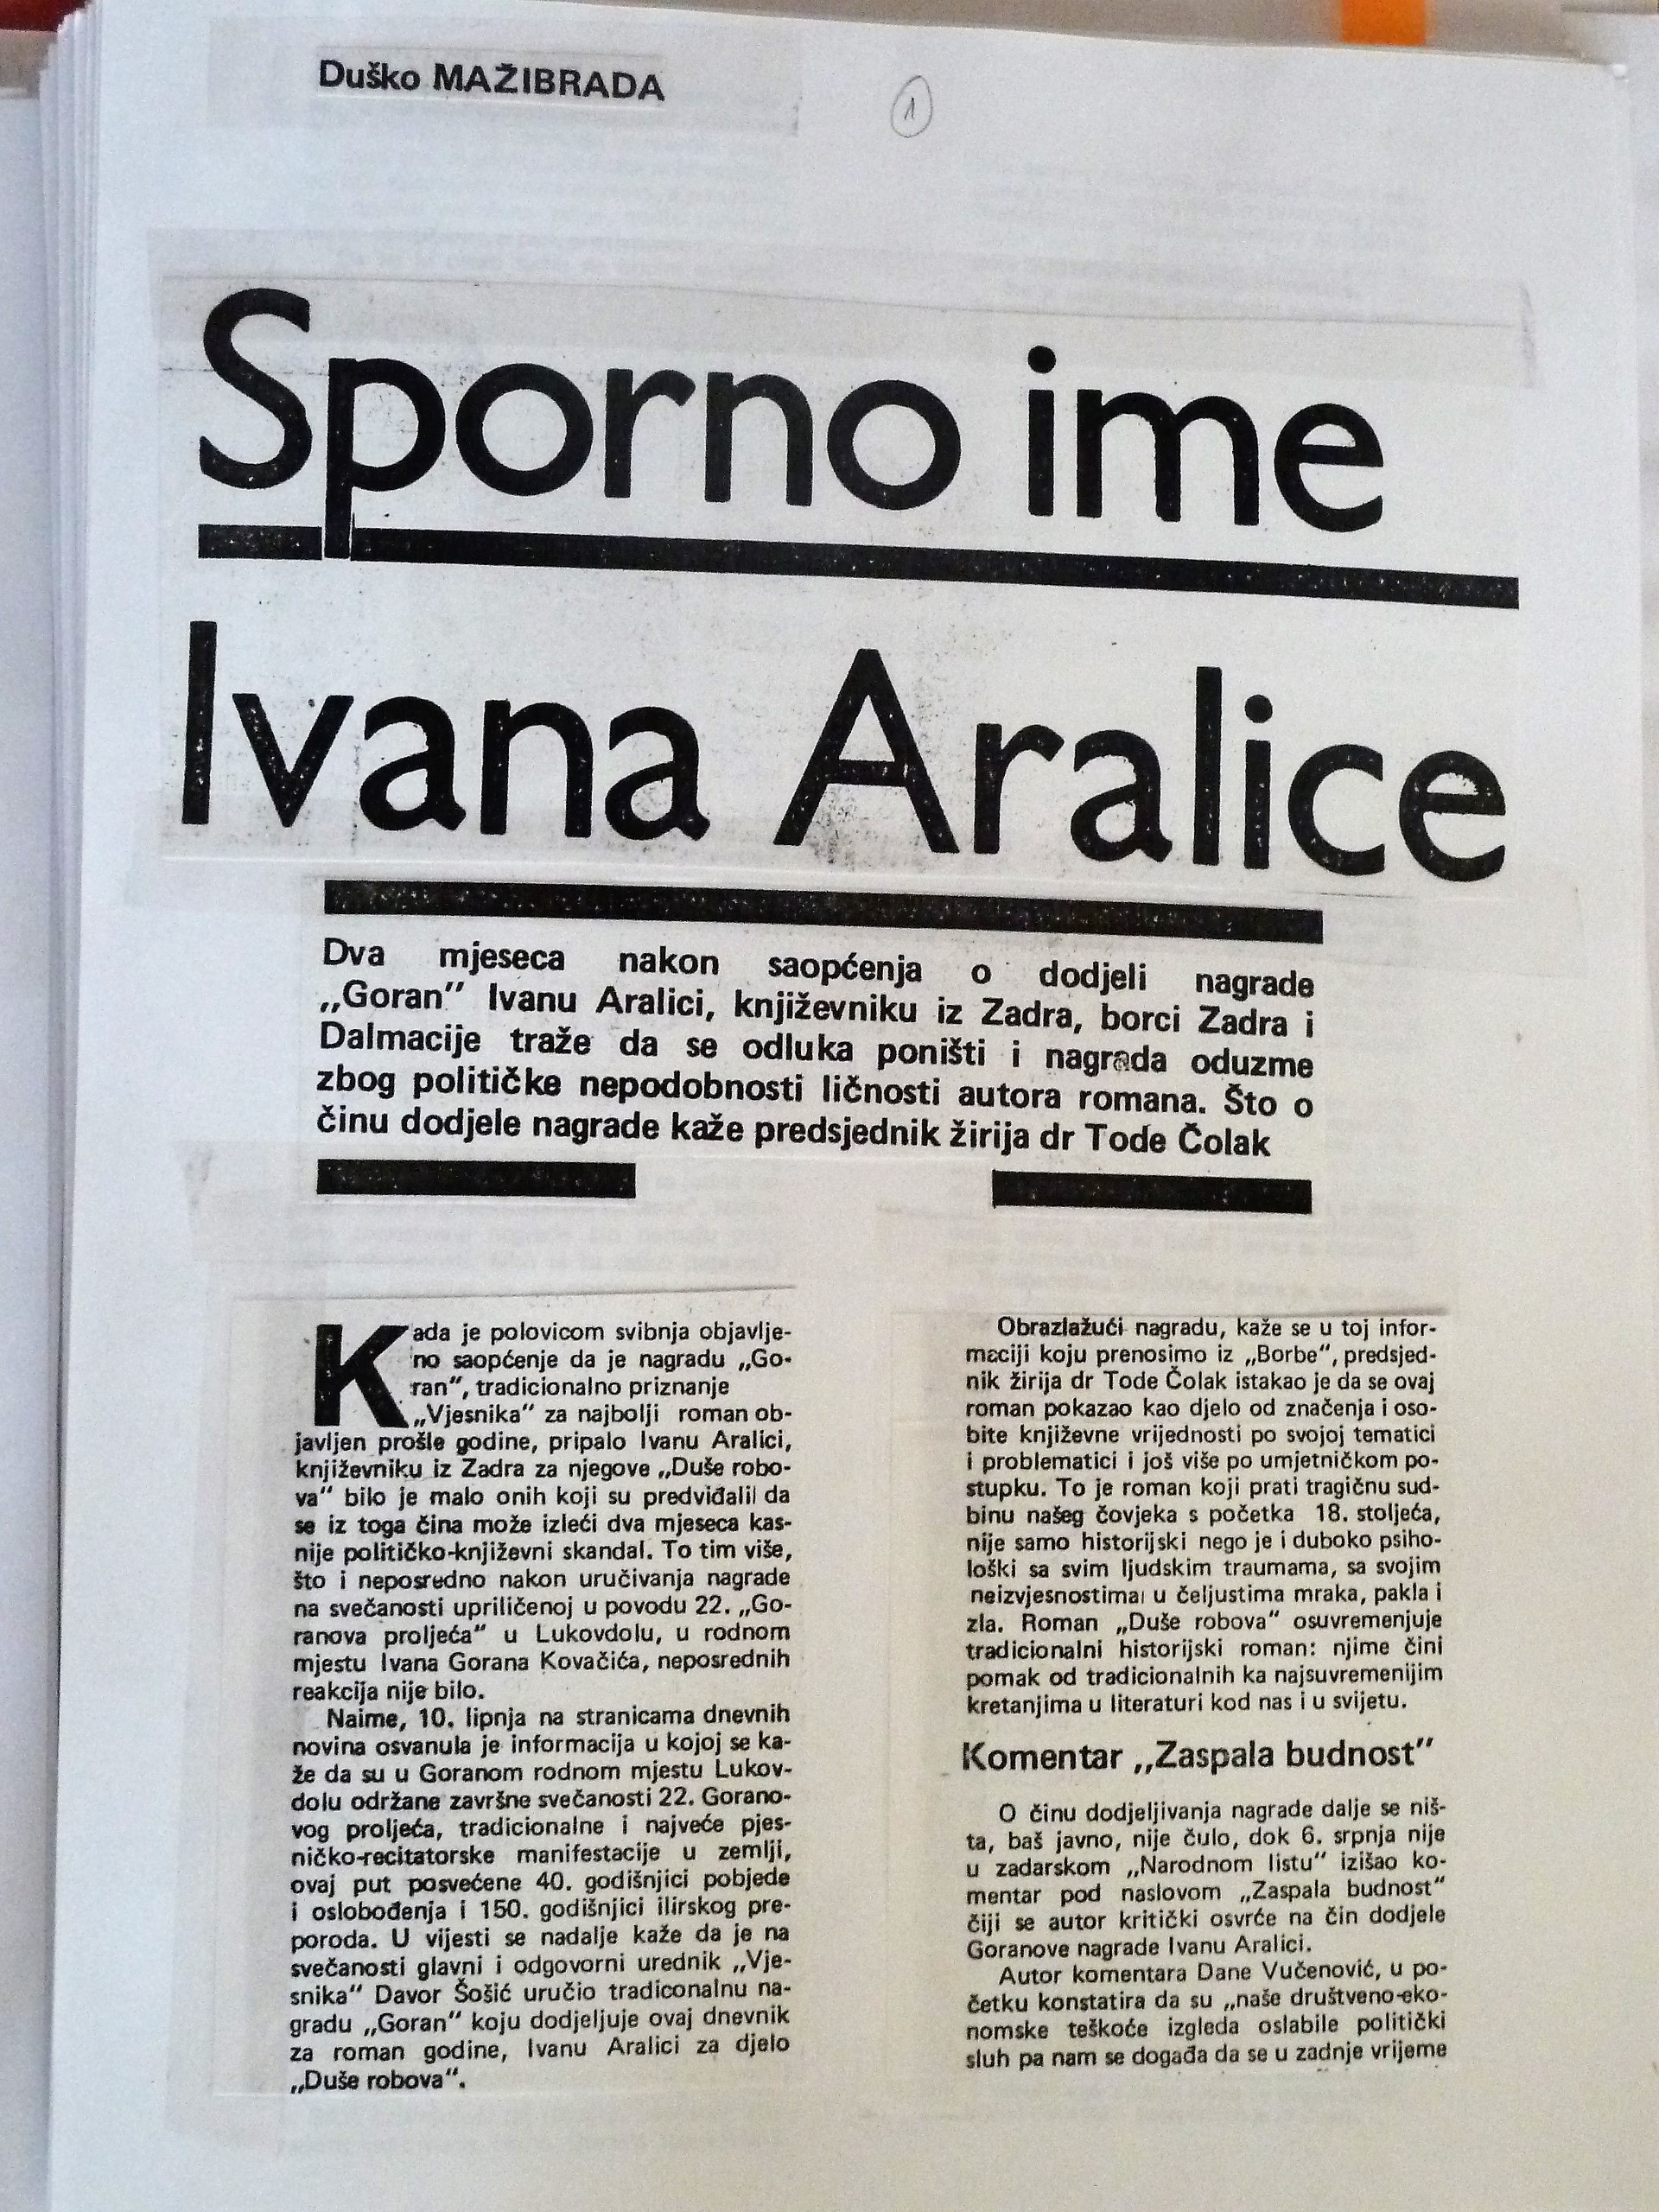 Press clipping with the headline 'The contested name of Ivan Aralica' written by Duško Mažibrada, Nedjeljna Dalmacija, 21 July 1985.